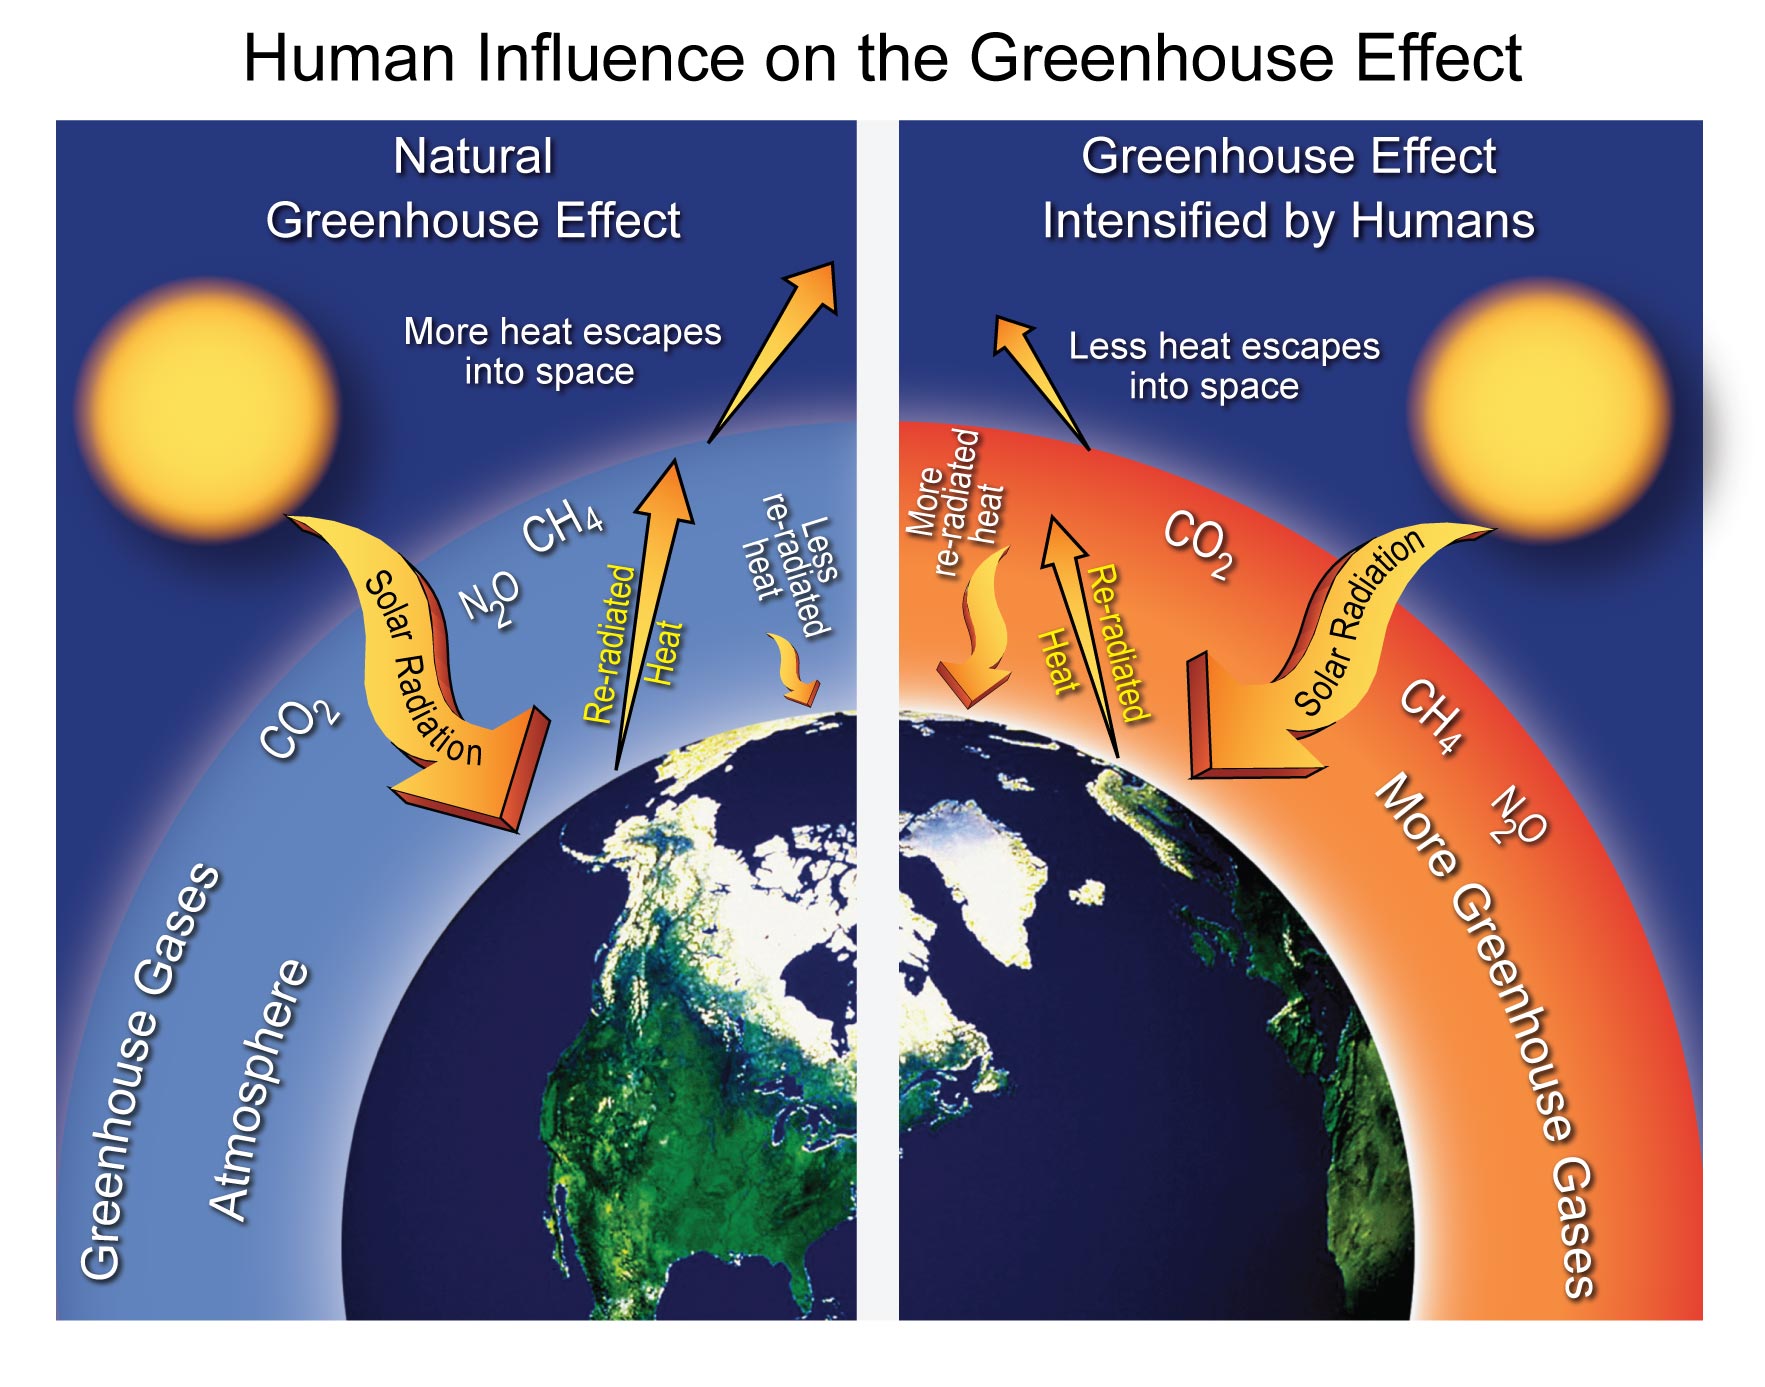 https://nca2014.globalchange.gov/report/appendices/faqs/graphics/human-influence-greenhouse-effect